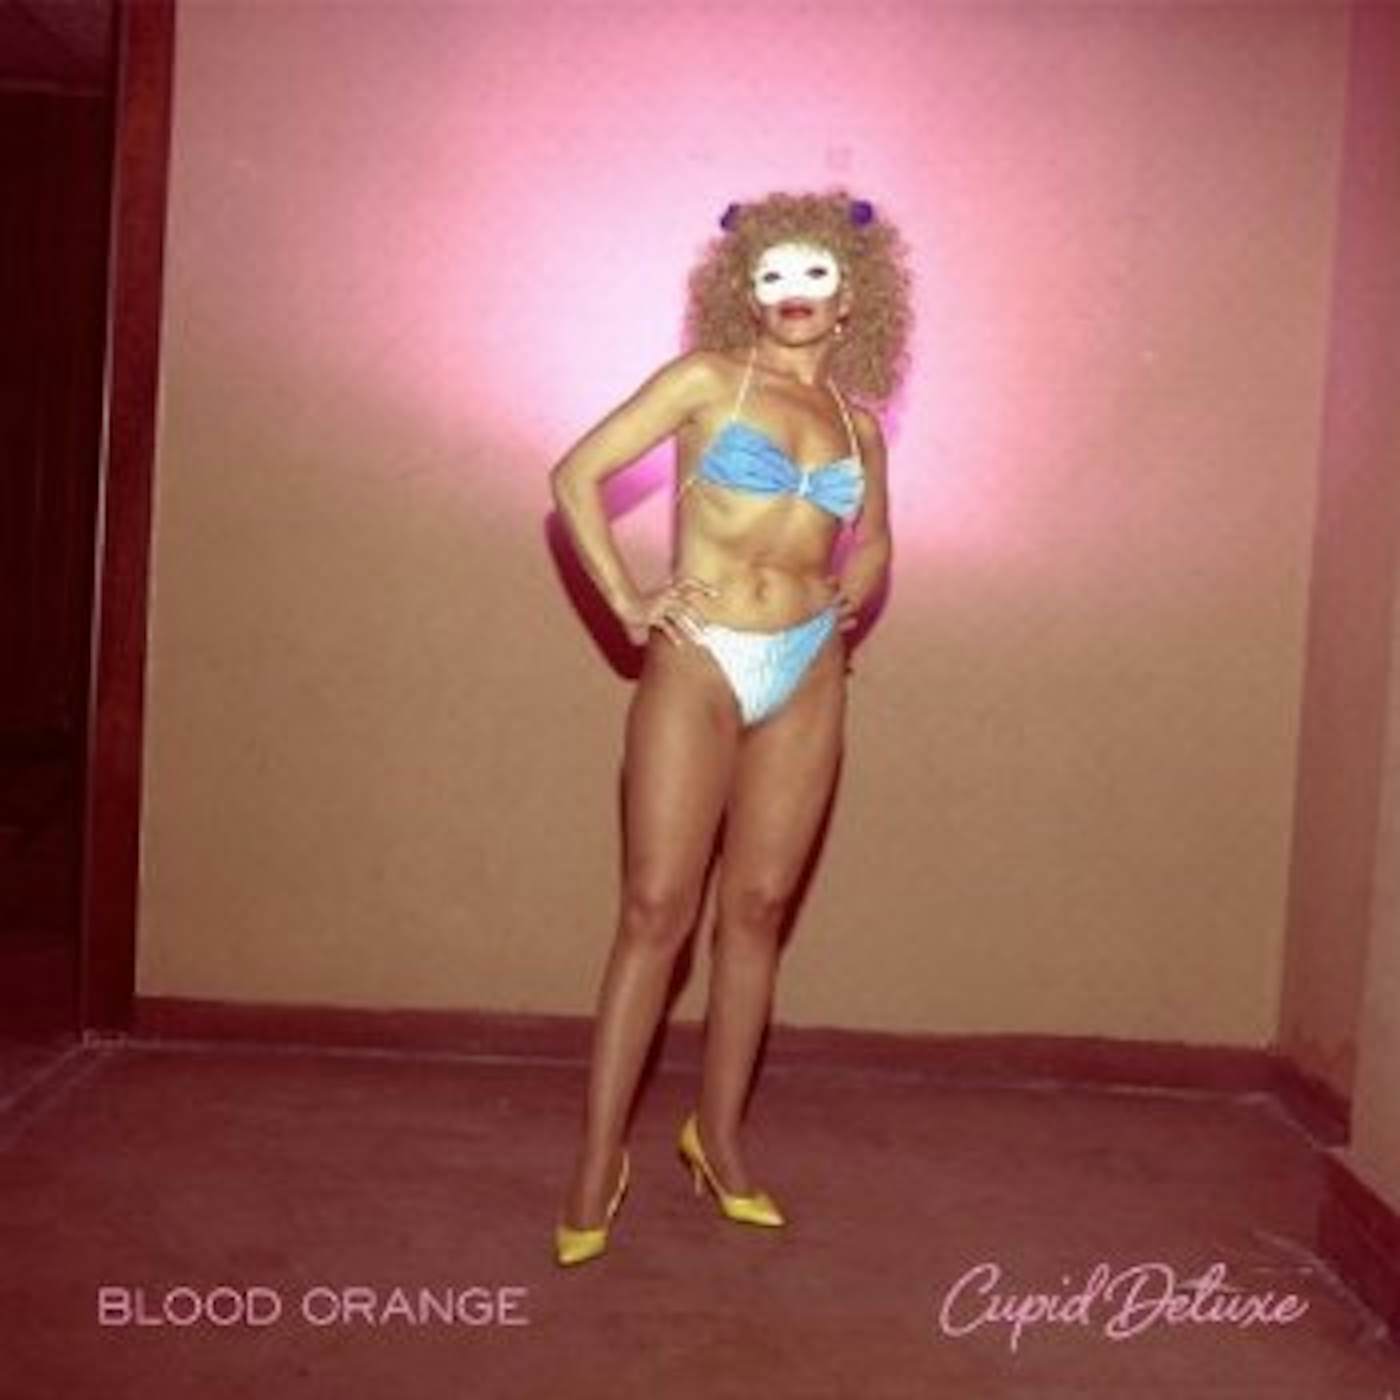 Blood Orange Cupid Deluxe Vinyl Record